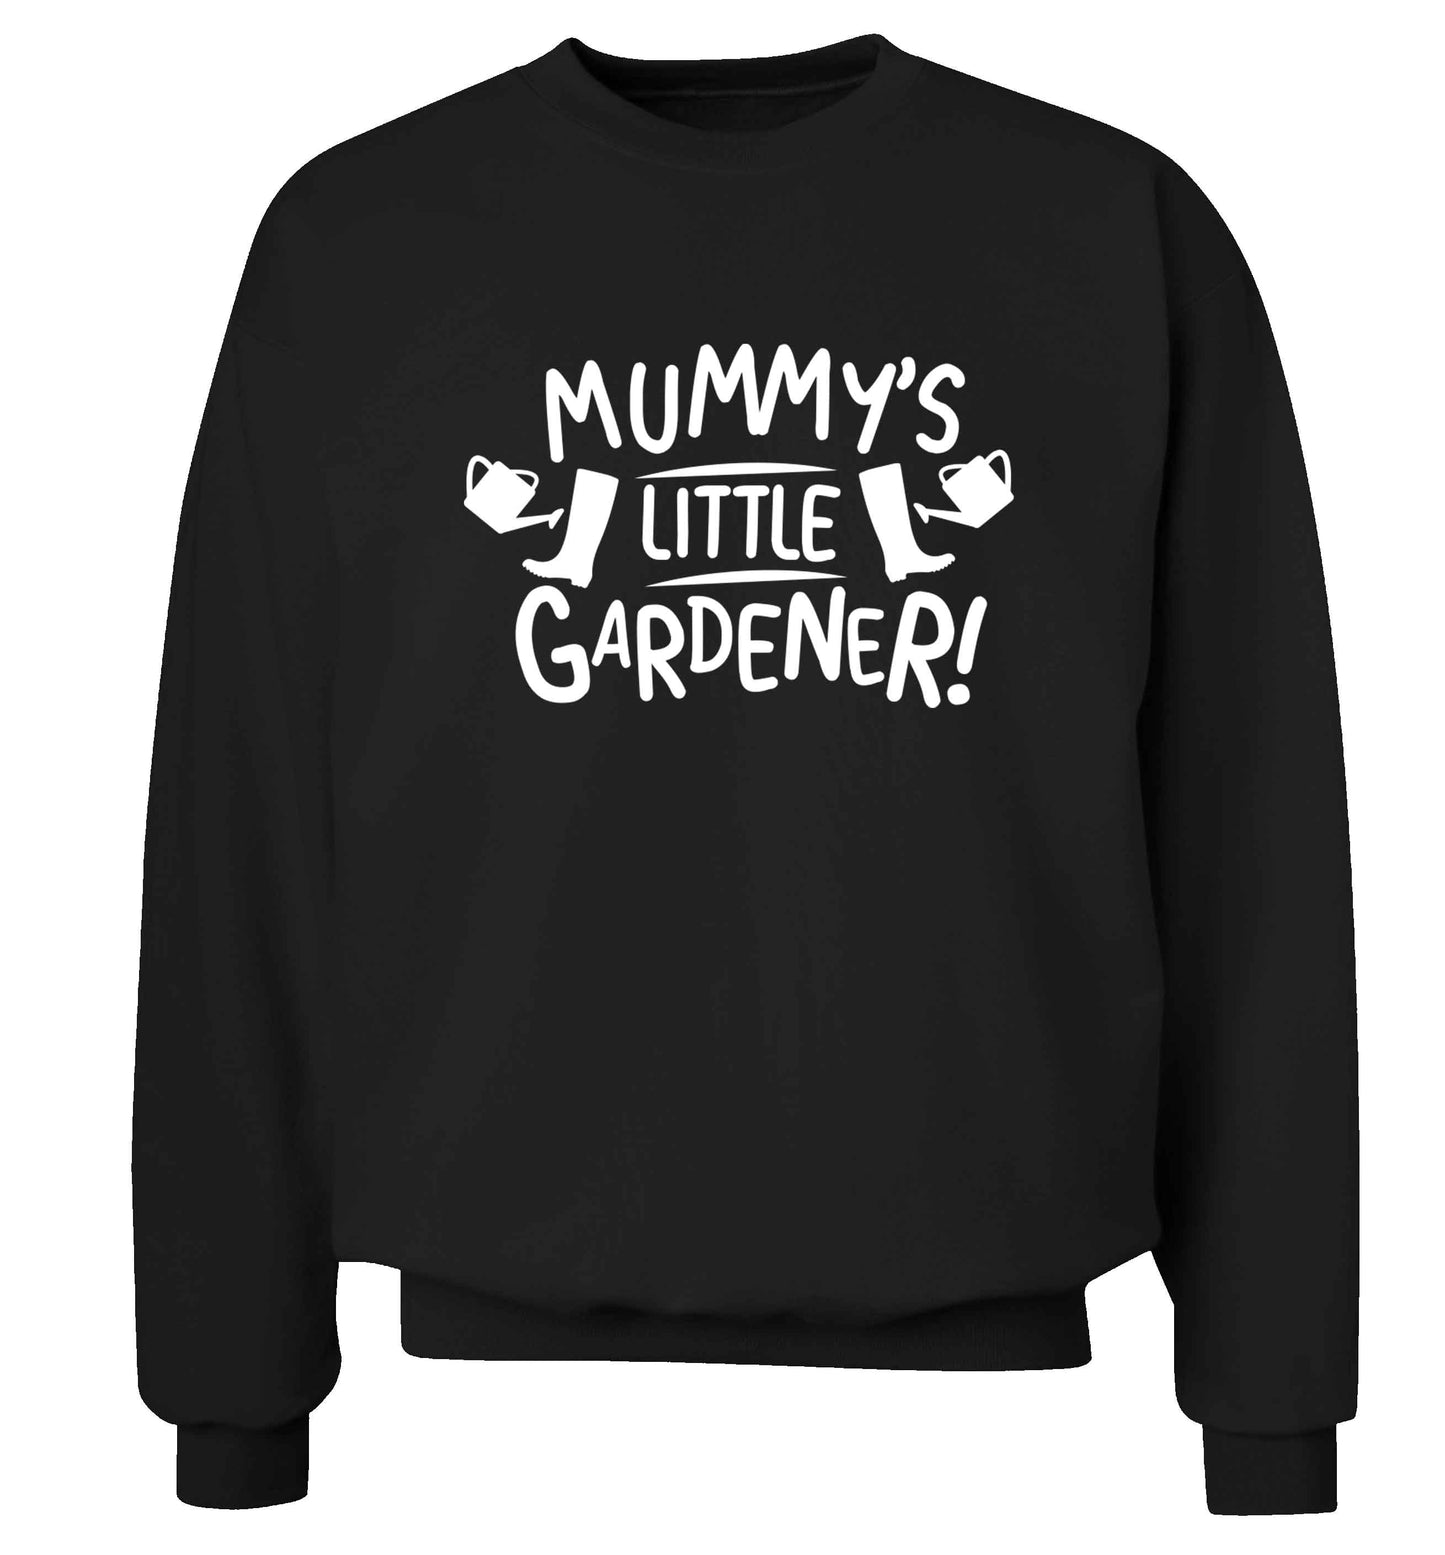 Mummy's little gardener Adult's unisex black Sweater 2XL